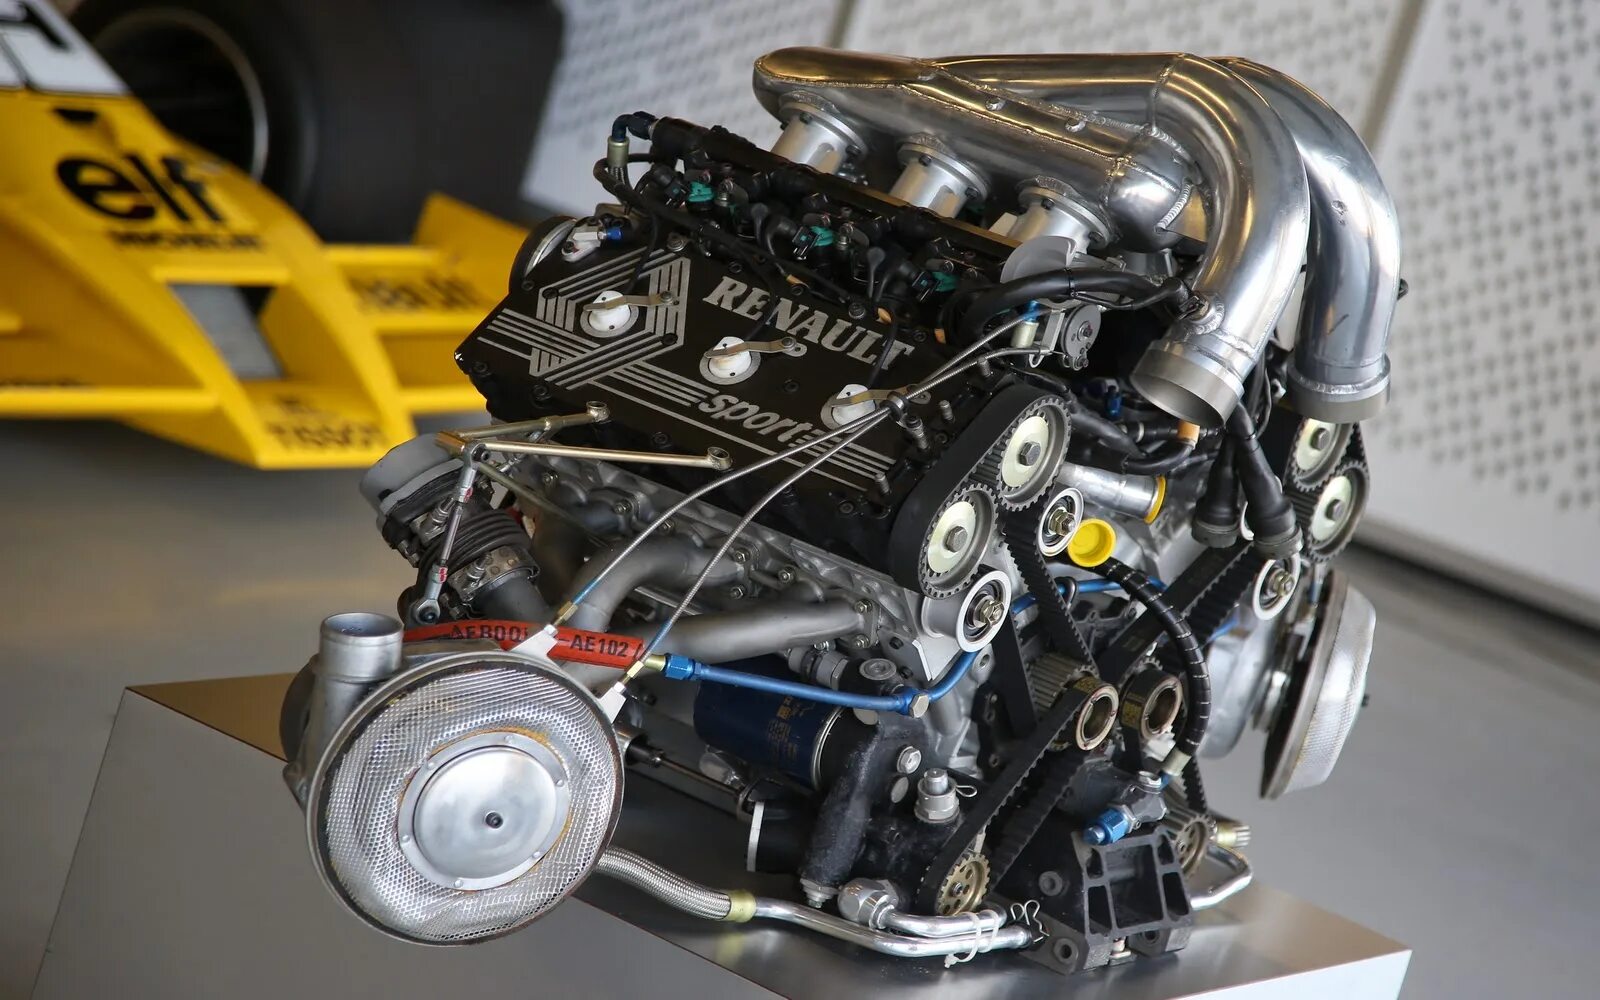 Renault f1 engine. Renault Formula 1 двигатель. Renault Turbo 2. Ренаулт f1n двигатель. Модели двигателей рено